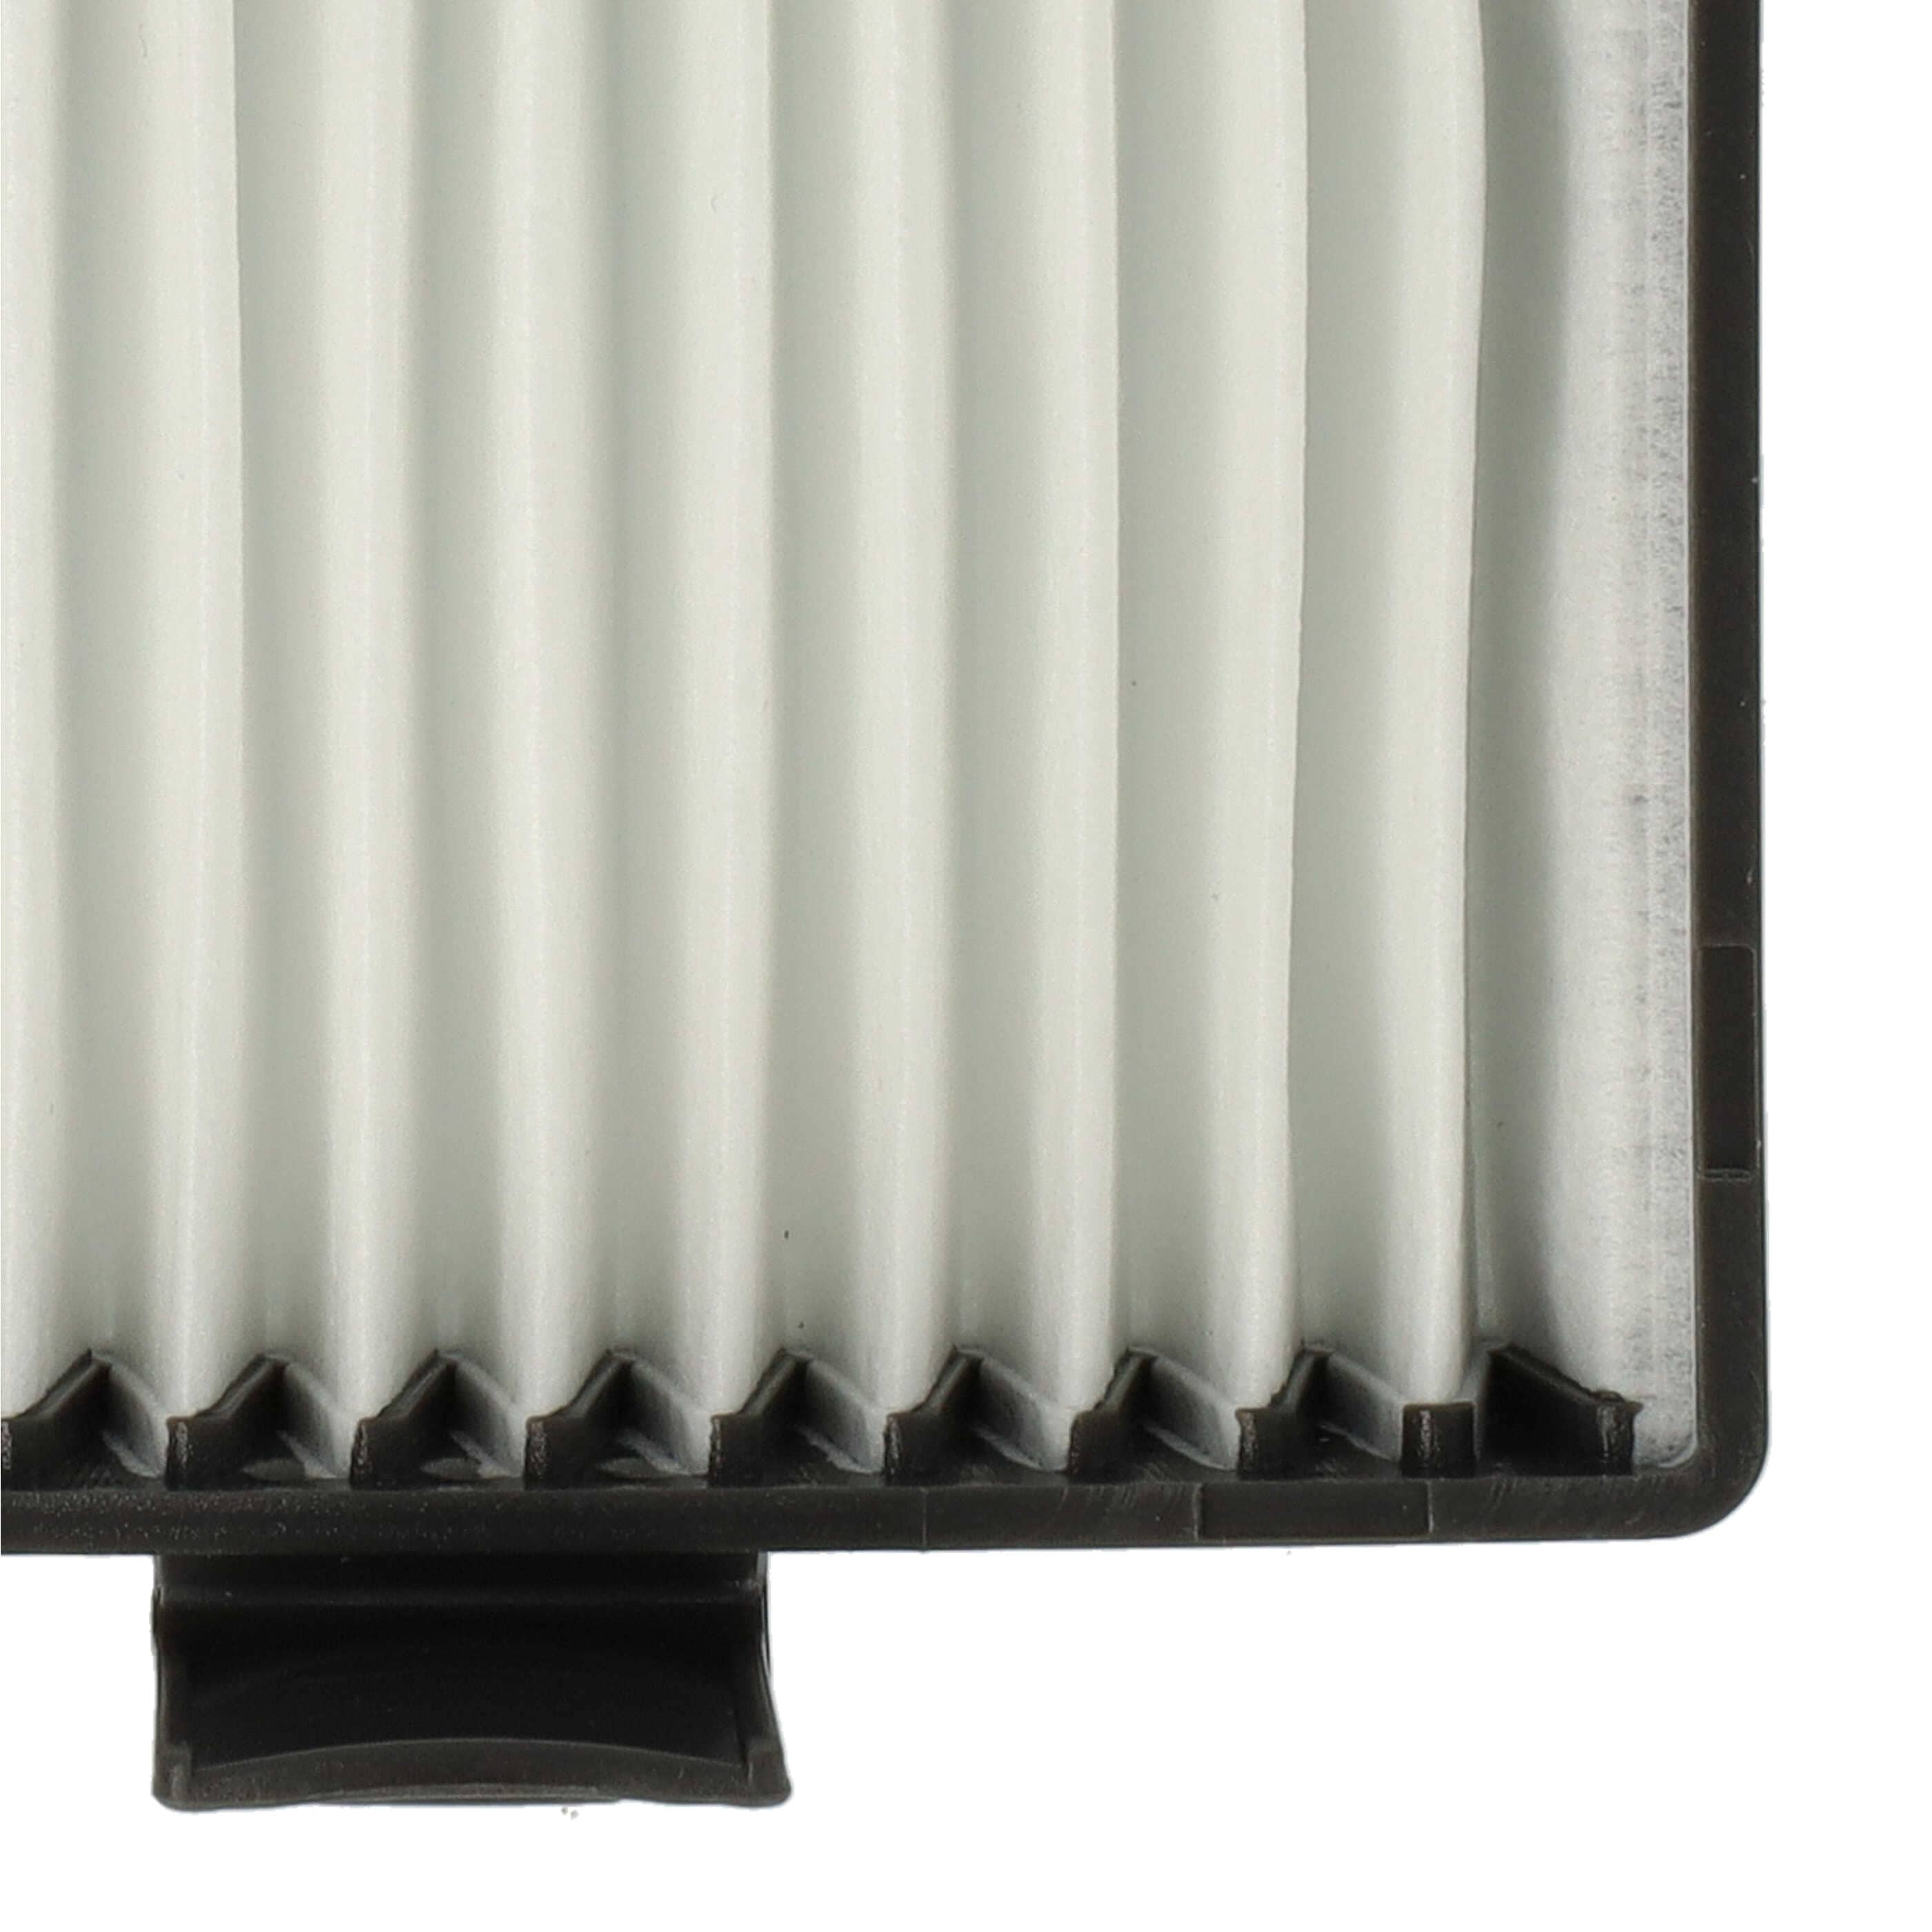 Filtre remplace Ryobi CHV 182, CHV 182 M, CHV182, CHV182M pour aspirateur - filtre de rechange